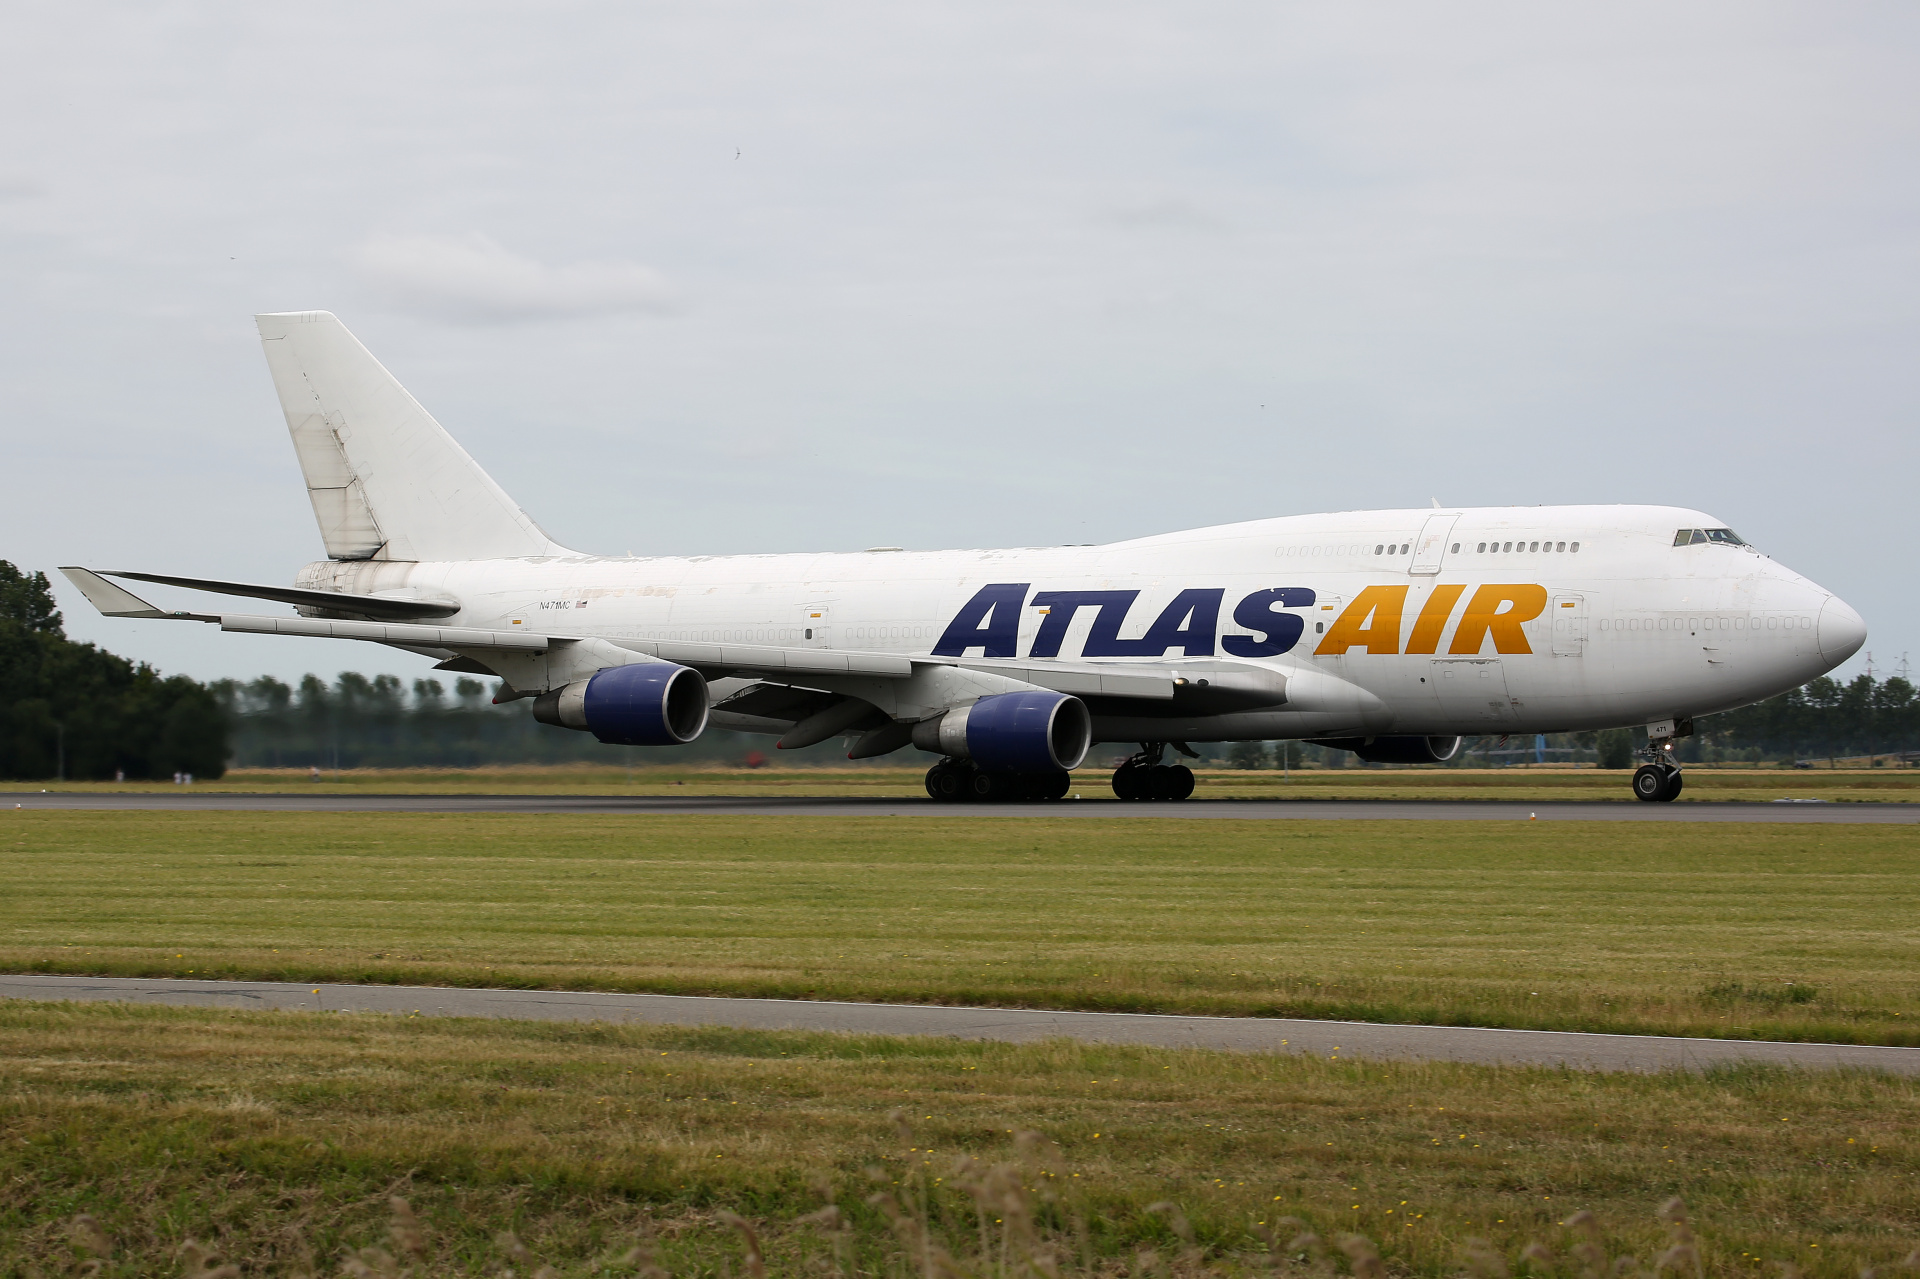 BCF, N471MC, Atlas Air (Aircraft » Schiphol Spotting » Boeing 747-400F)